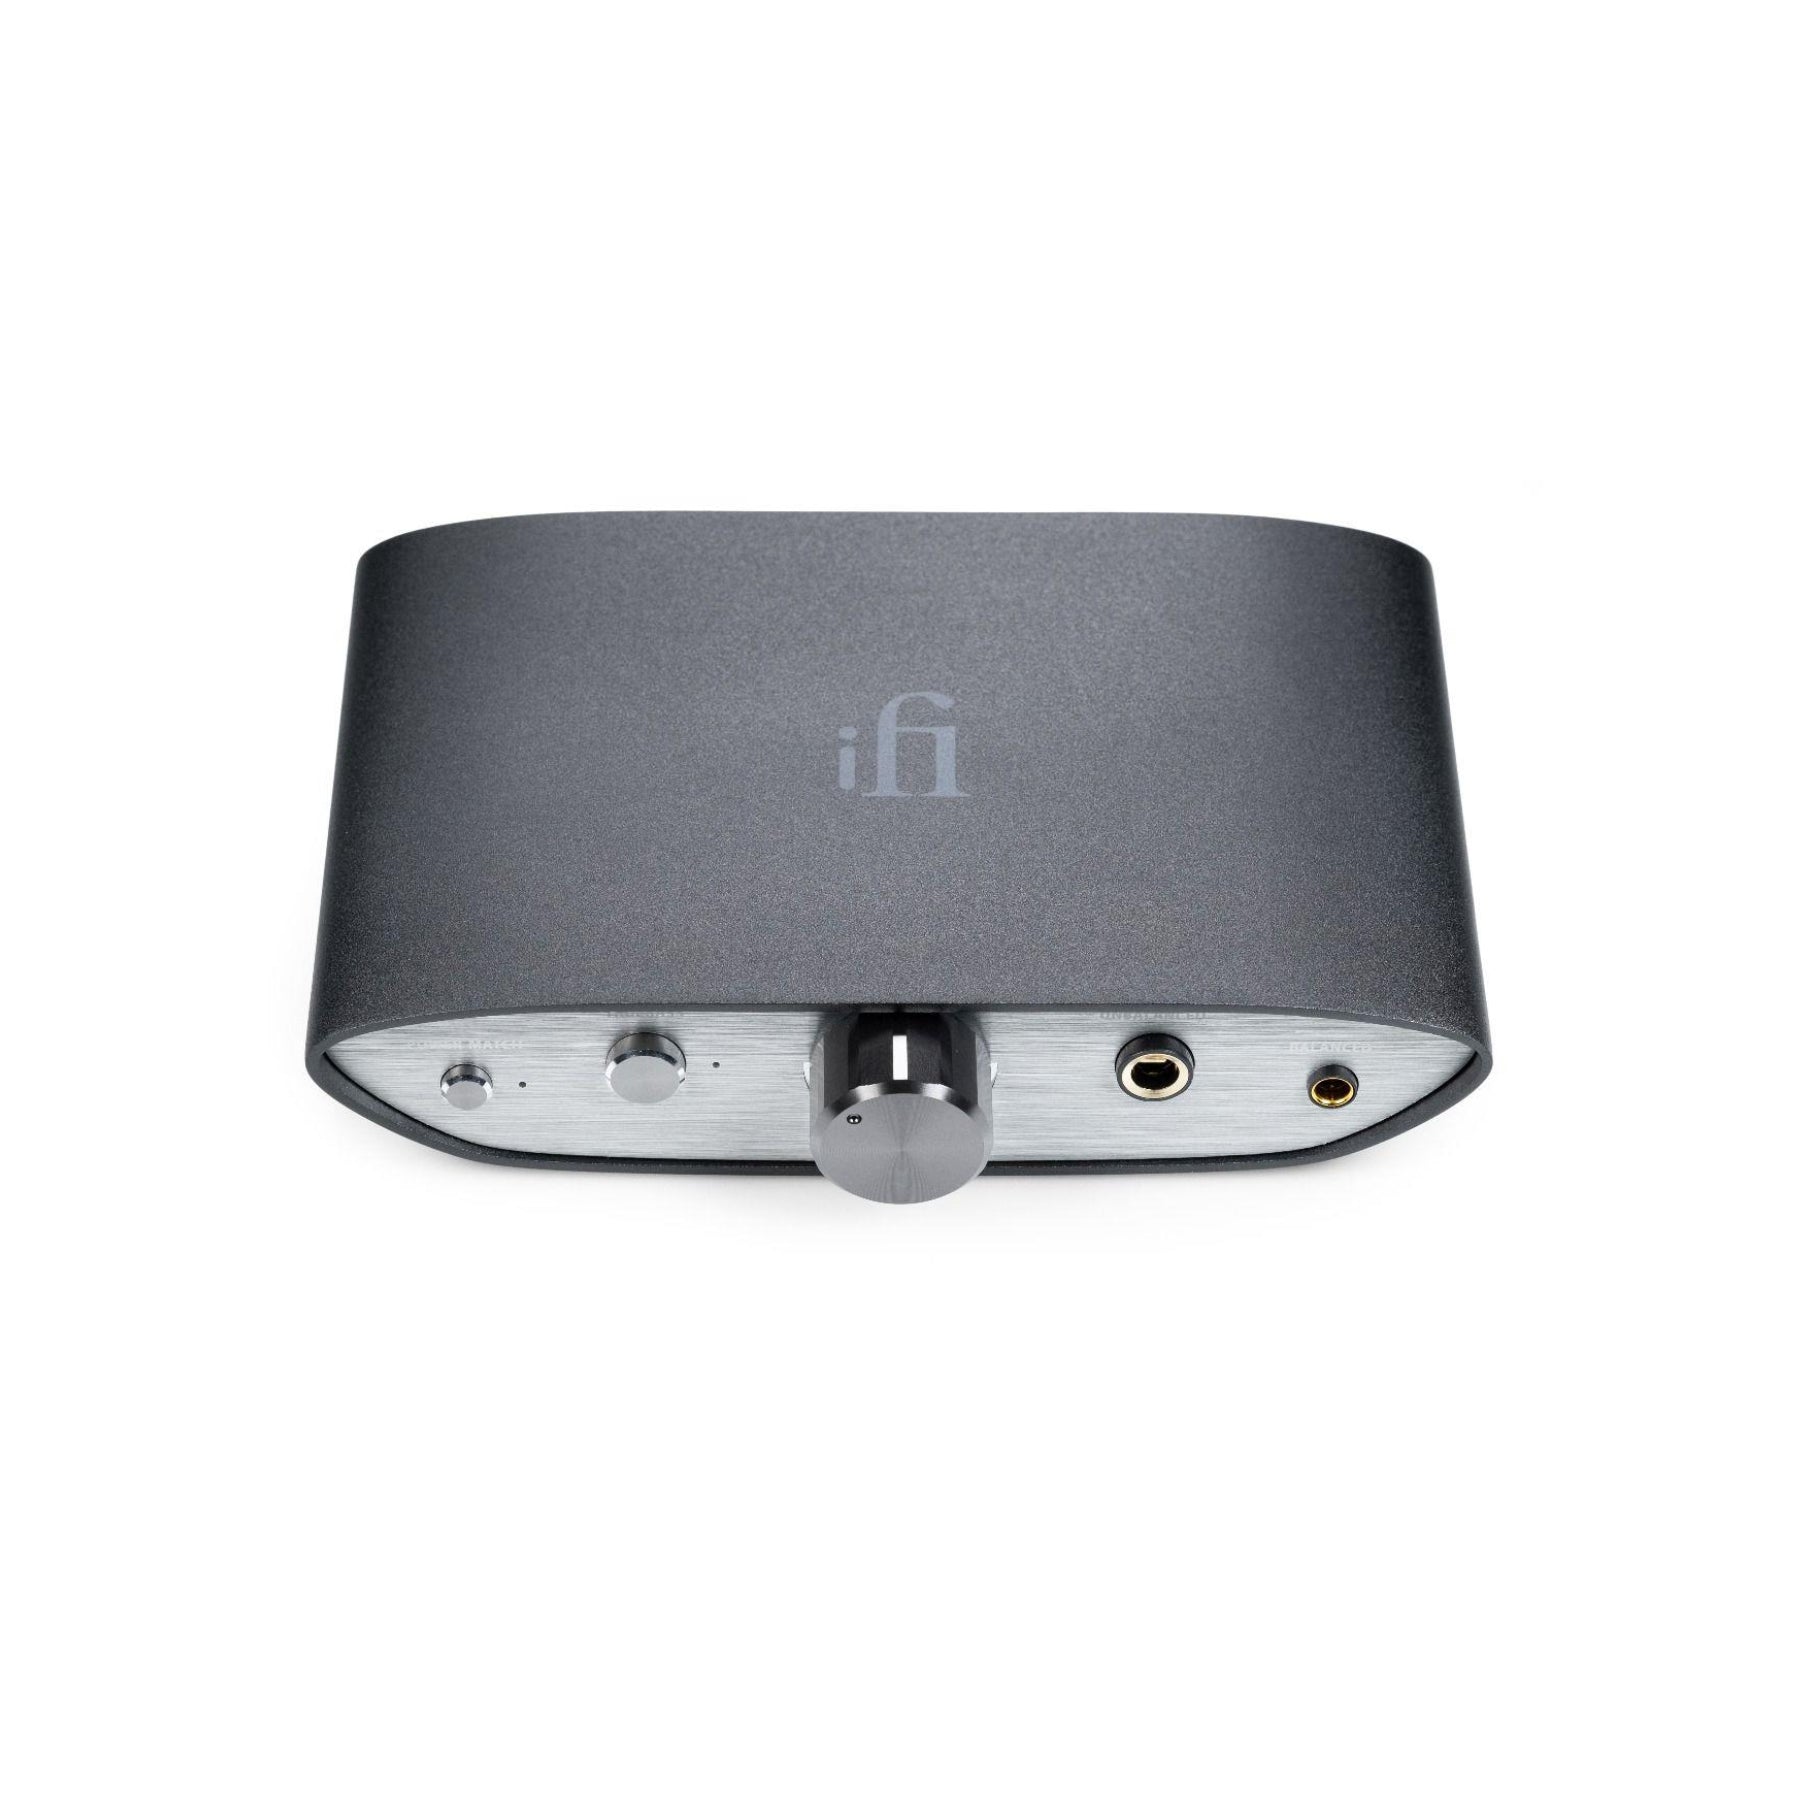 iFi Audio ZEN DAC Desktop USB DAC and headphone amplifier at